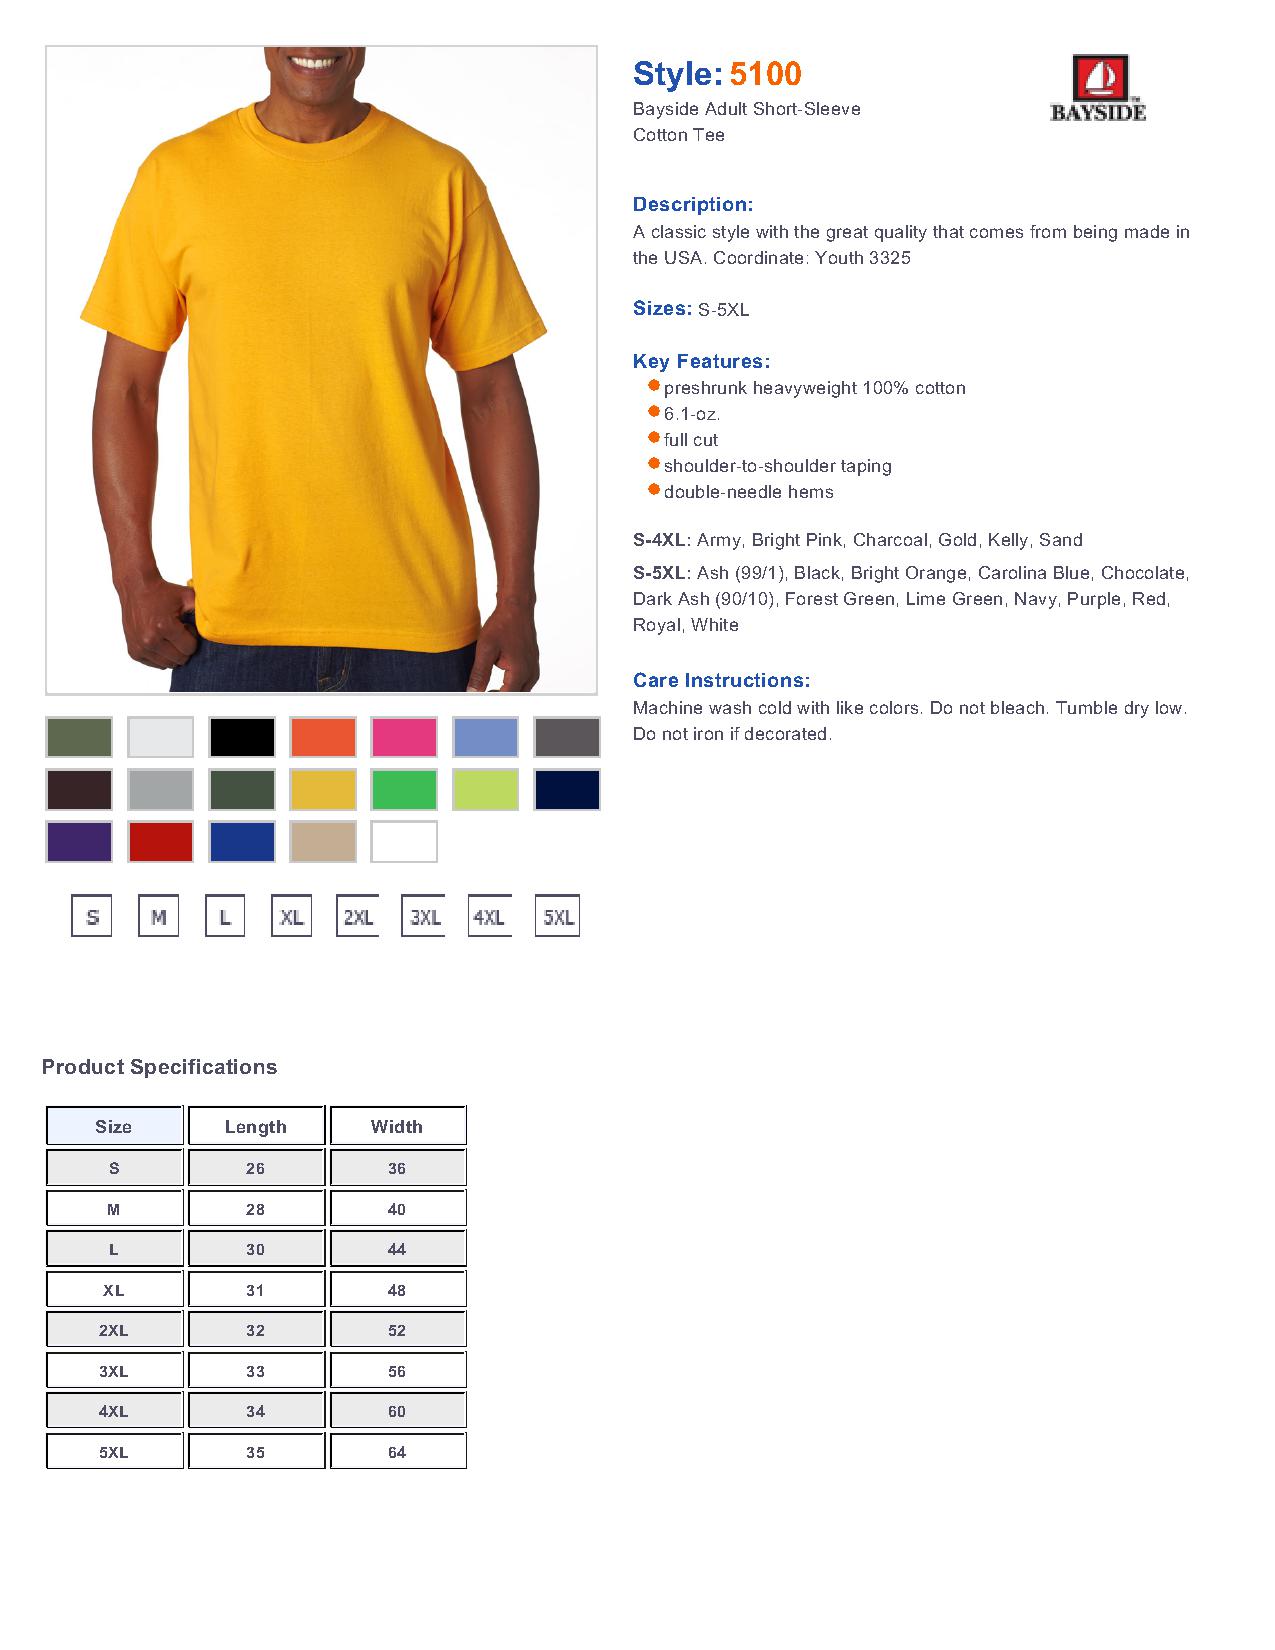 Bayside 5100 Short Sleeve T-Shirt $6.94 - T-Shirts